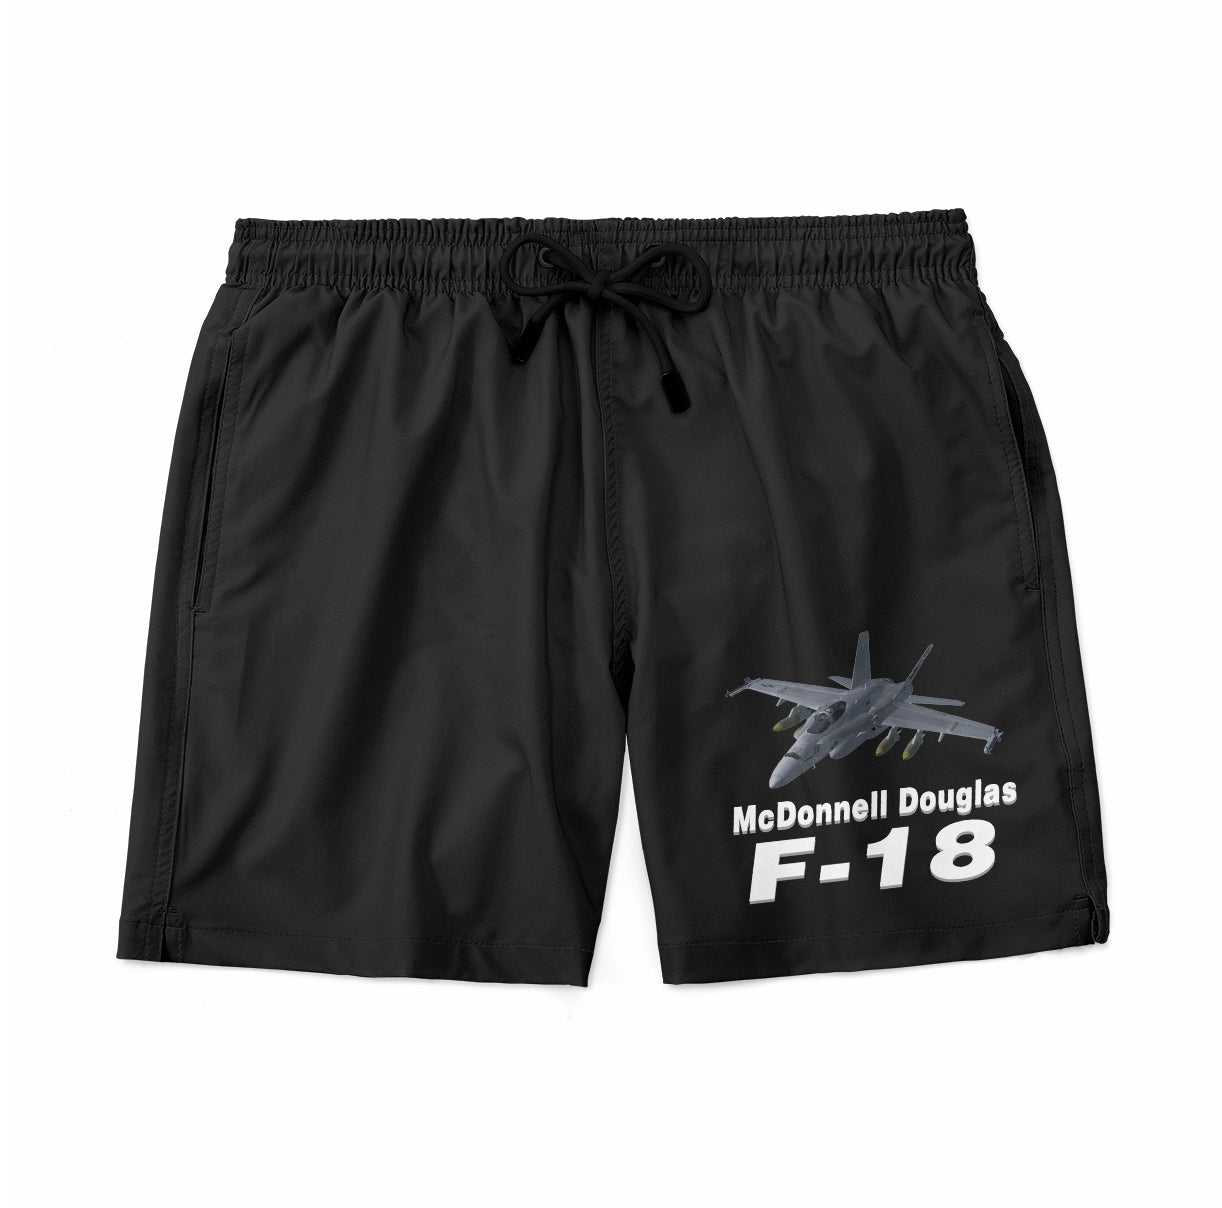 The McDonnell Douglas F18 Designed Swim Trunks & Shorts